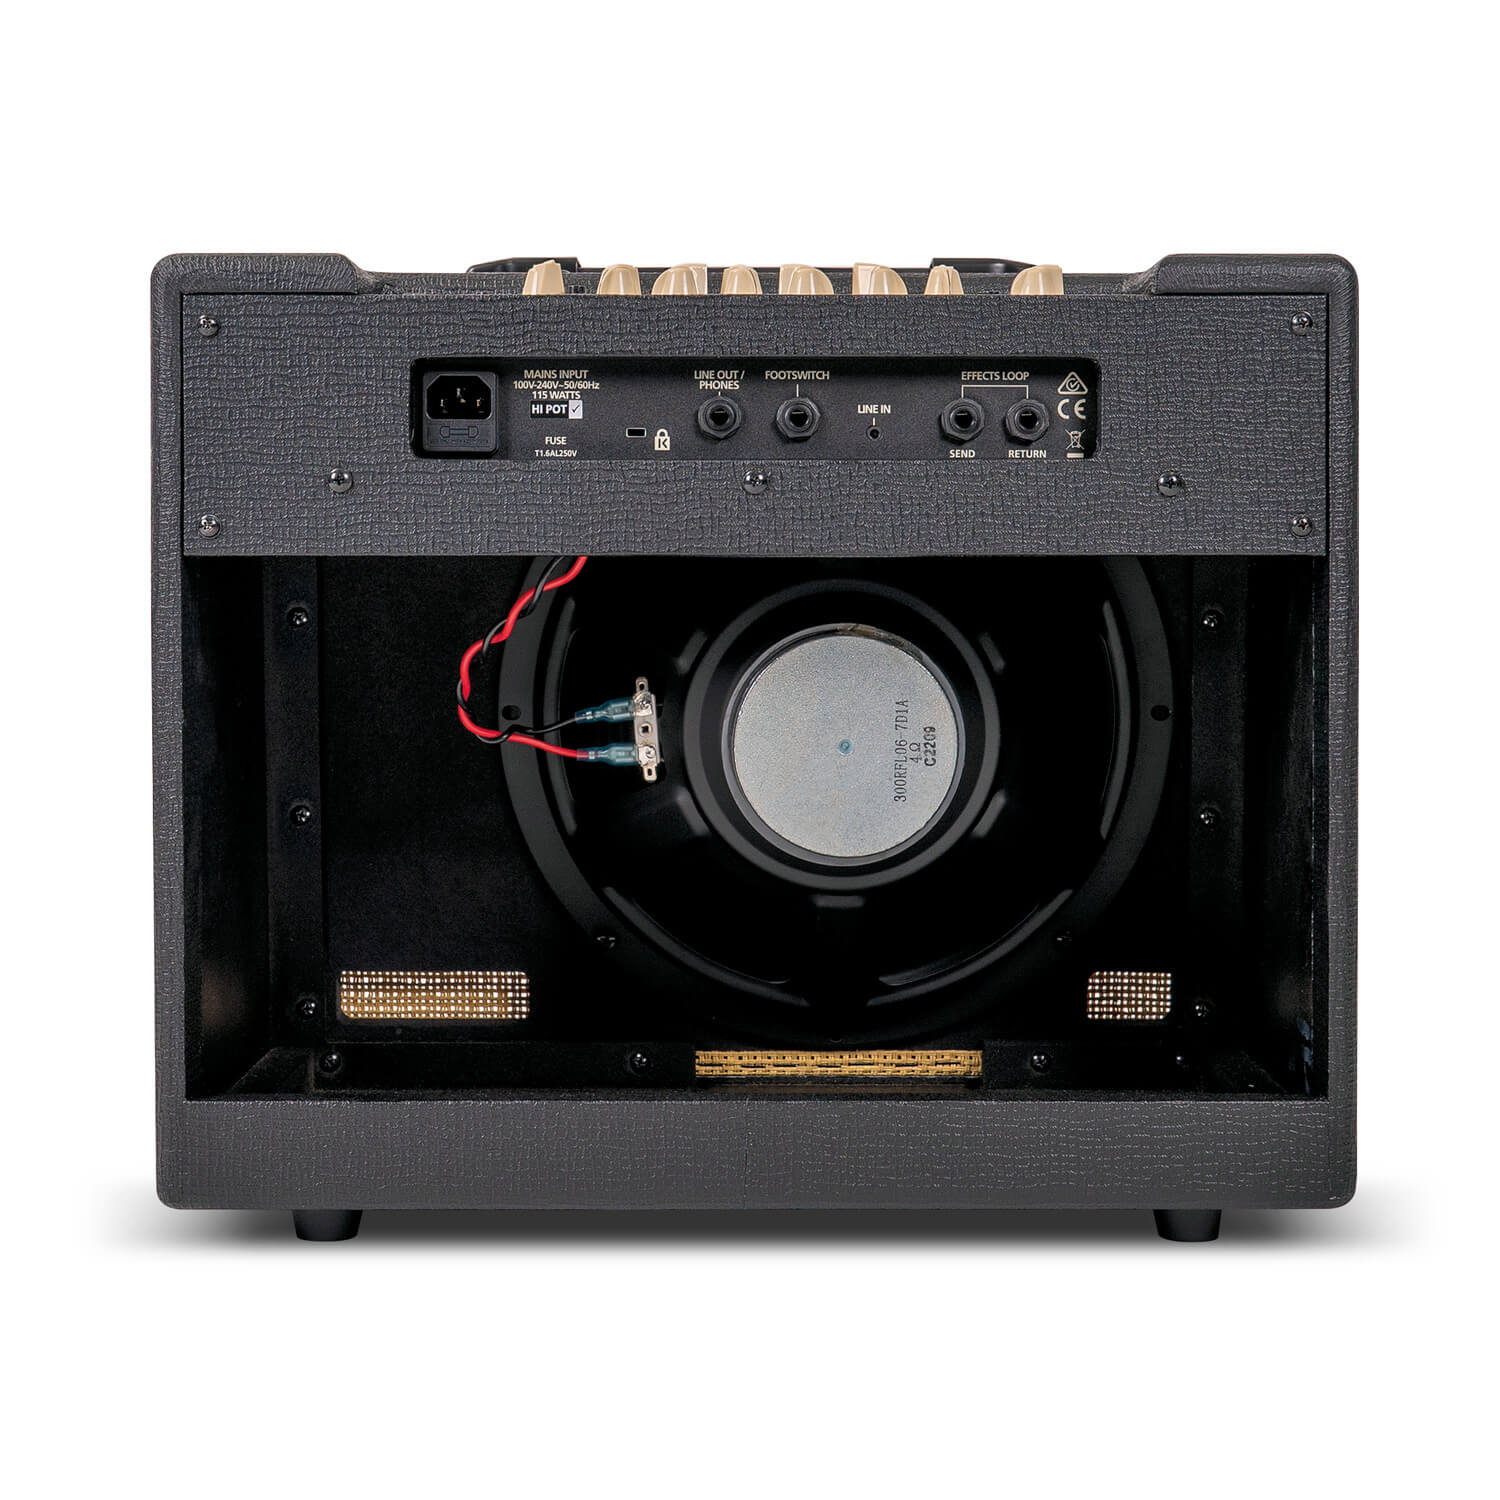 Blackstar Debut 50R 1 X 12 Inch 50-Watt Combo Amp